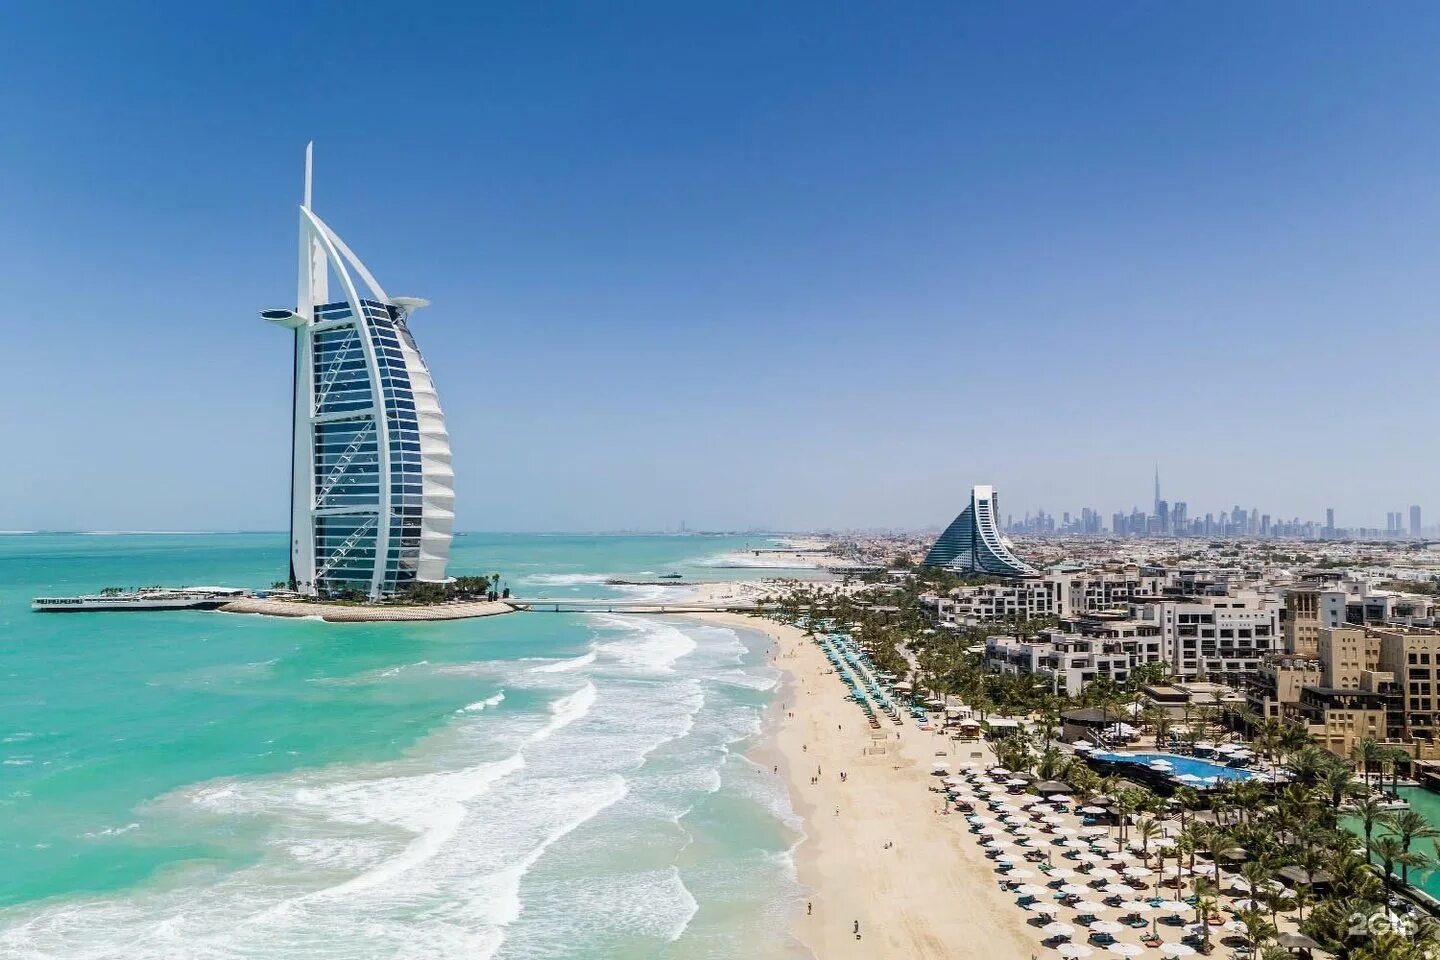 Дубай Джумейра Бич. Отель в Дубае Jumeirah Beach Hotel. Пляж Джумейра Бич в Дубае. Пляж Бурдж Аль араб Дубай.